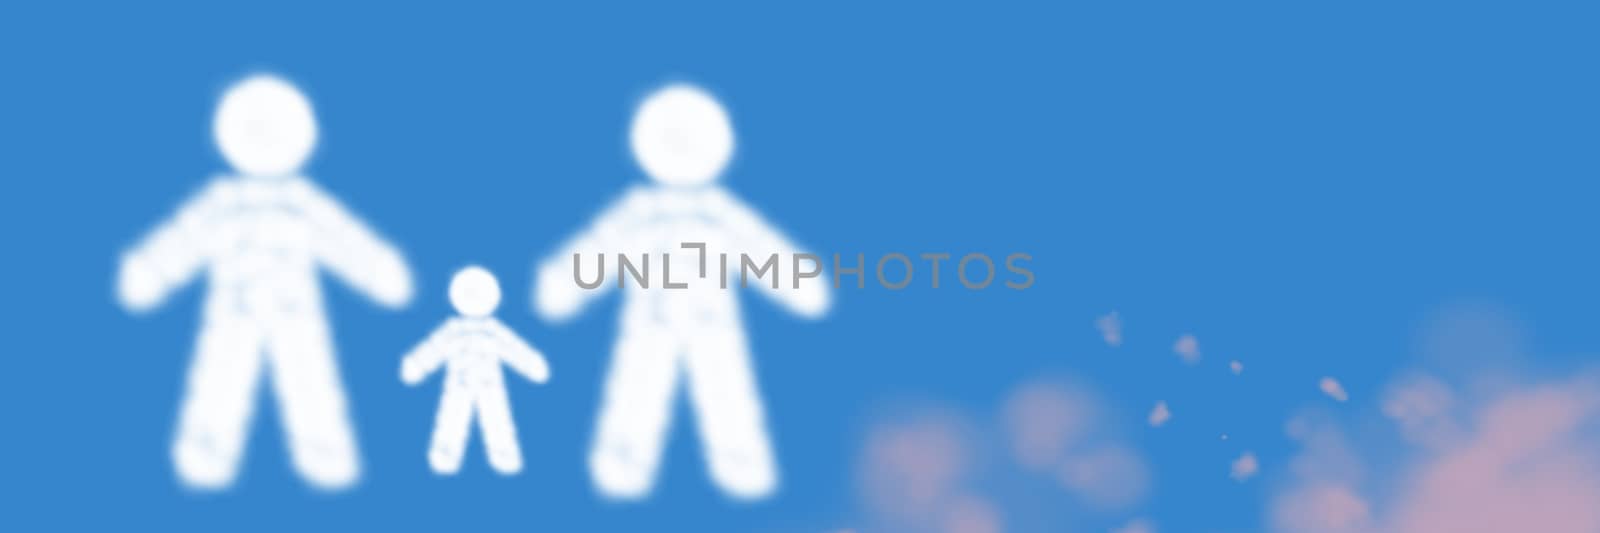 Composed Image of People Symbols on blue background by Wavebreakmedia